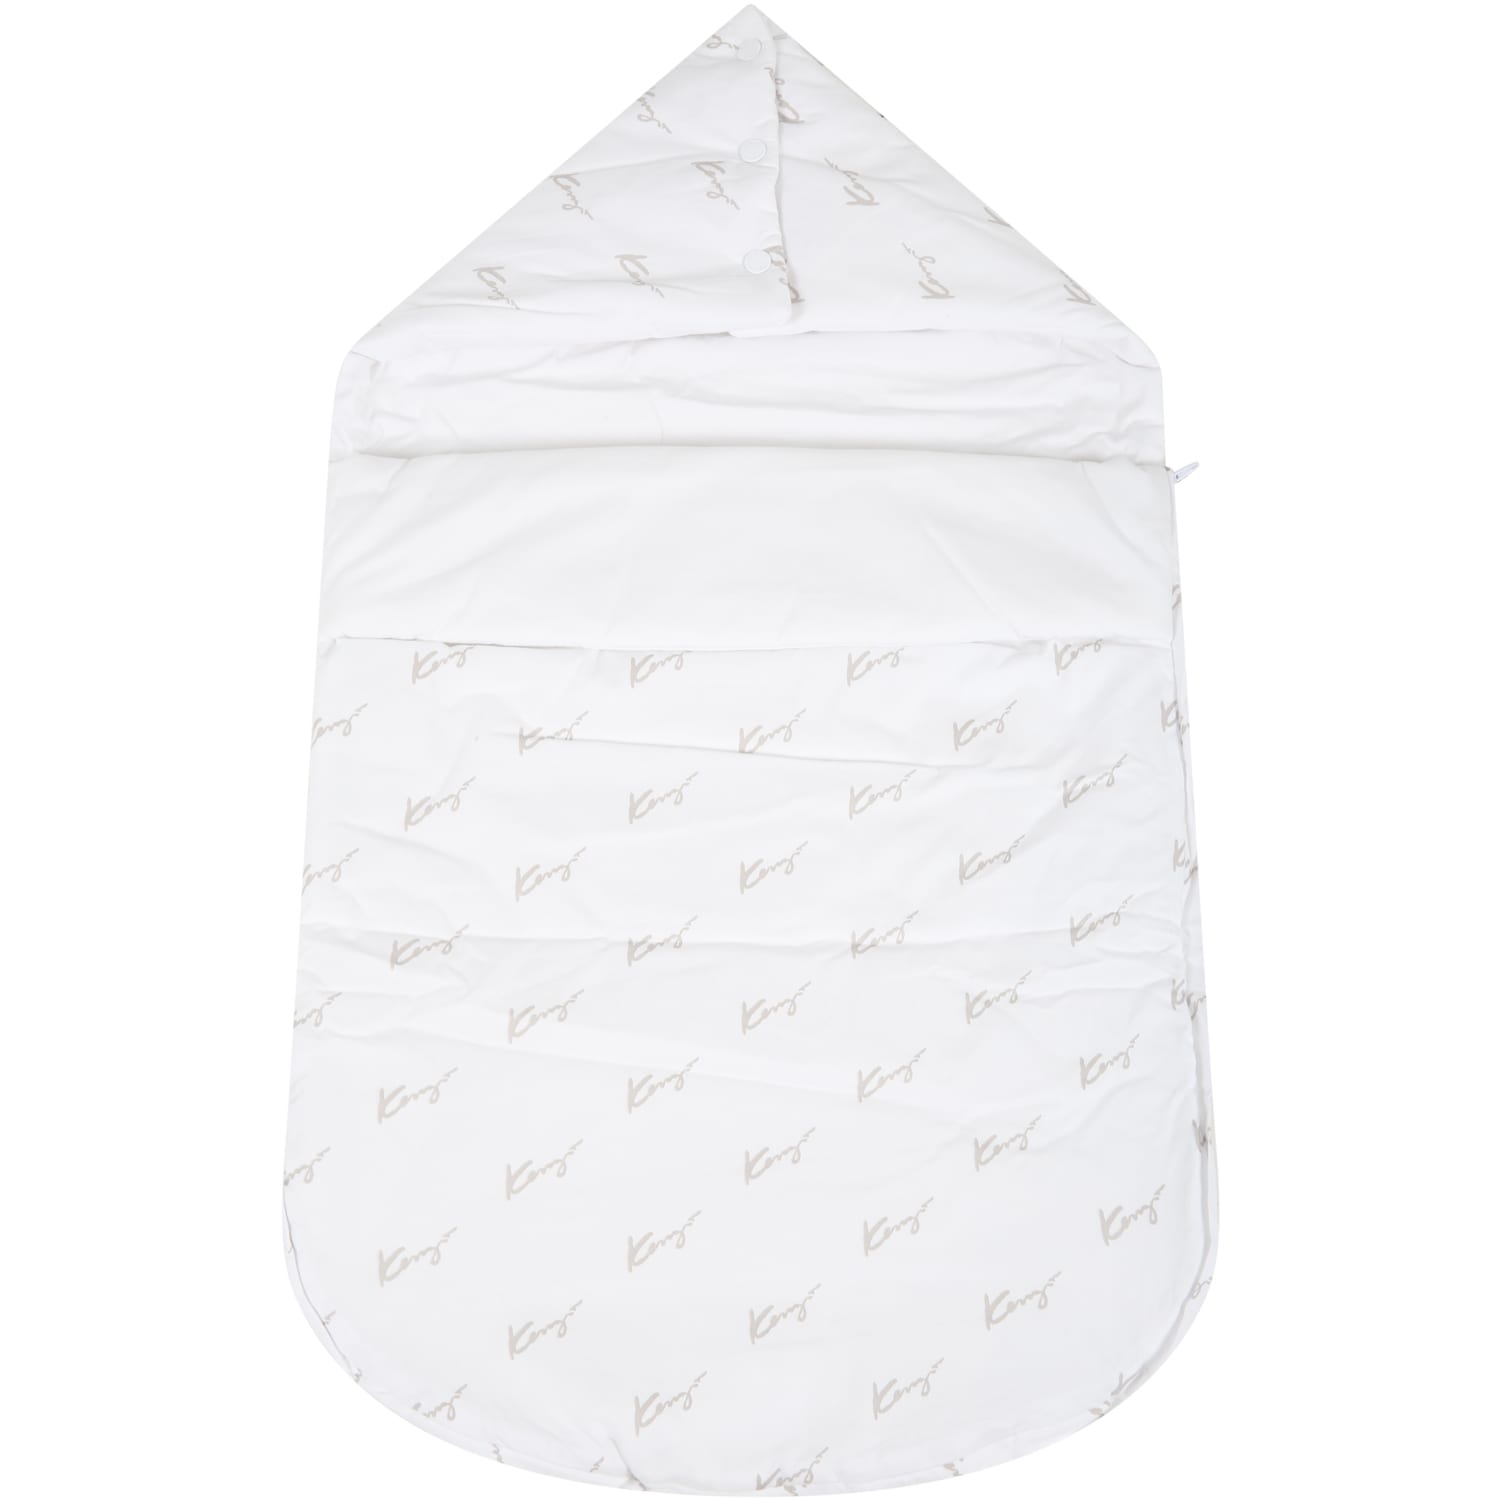 Kenzo Kids White Sleeping Bag For Baby Kids With Logos